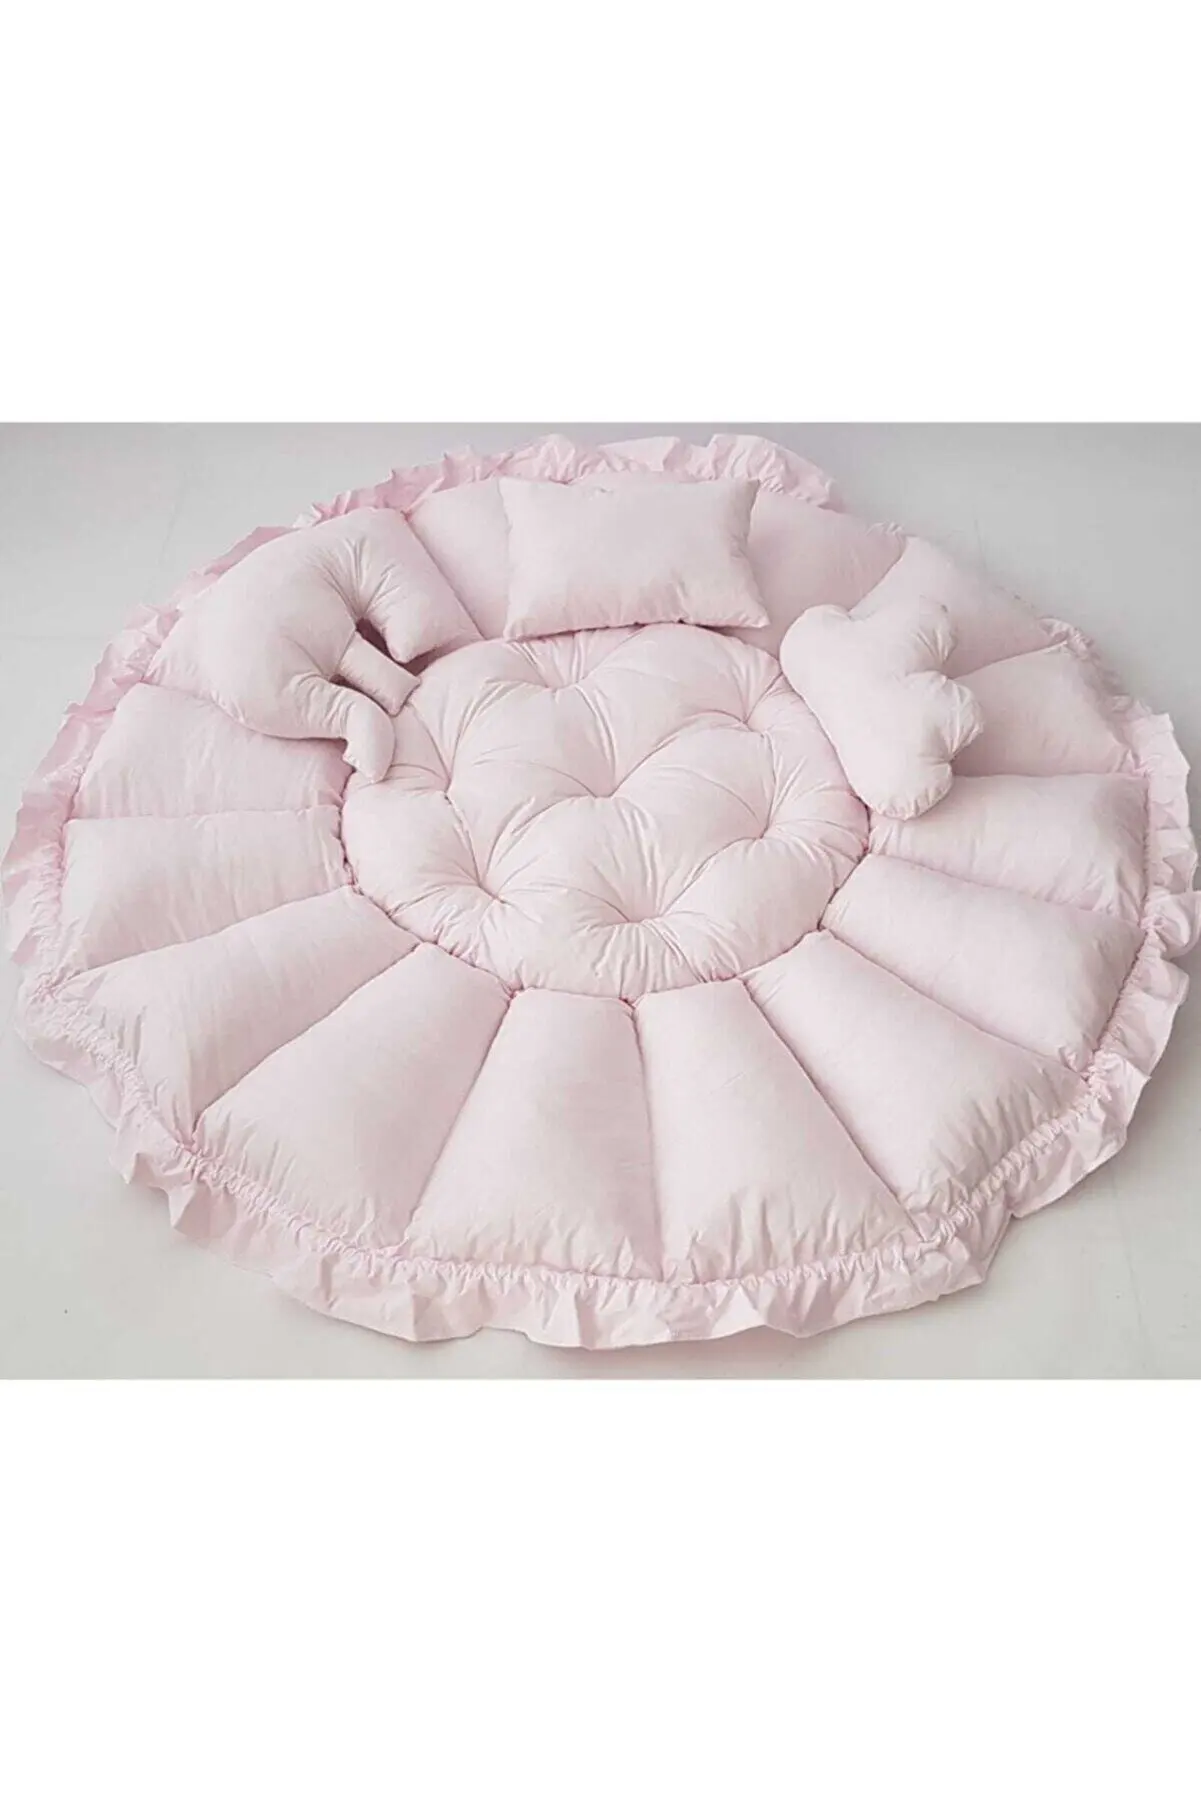 

Handmade babynest, baby PLAY mat, baby sleep bed and PLAY mat organic cotton fabric, baby sleeping bag